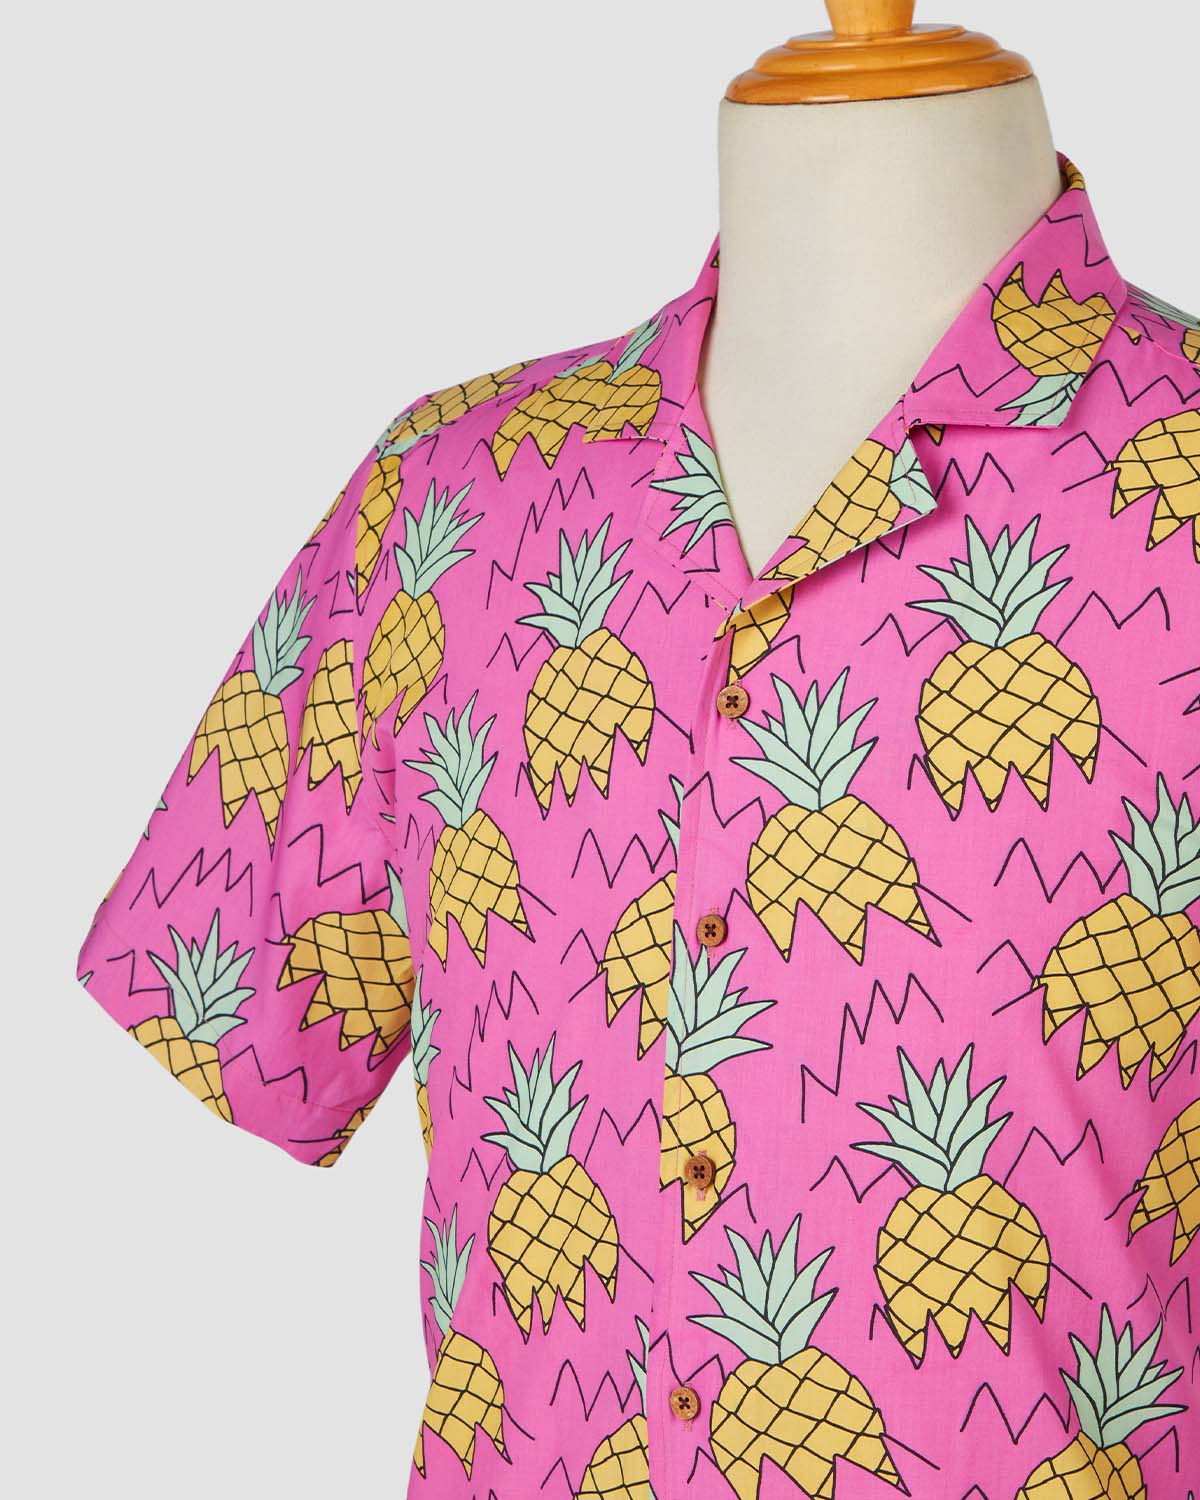 Bombay Shirt Company - Aloha Pineapple Shirt